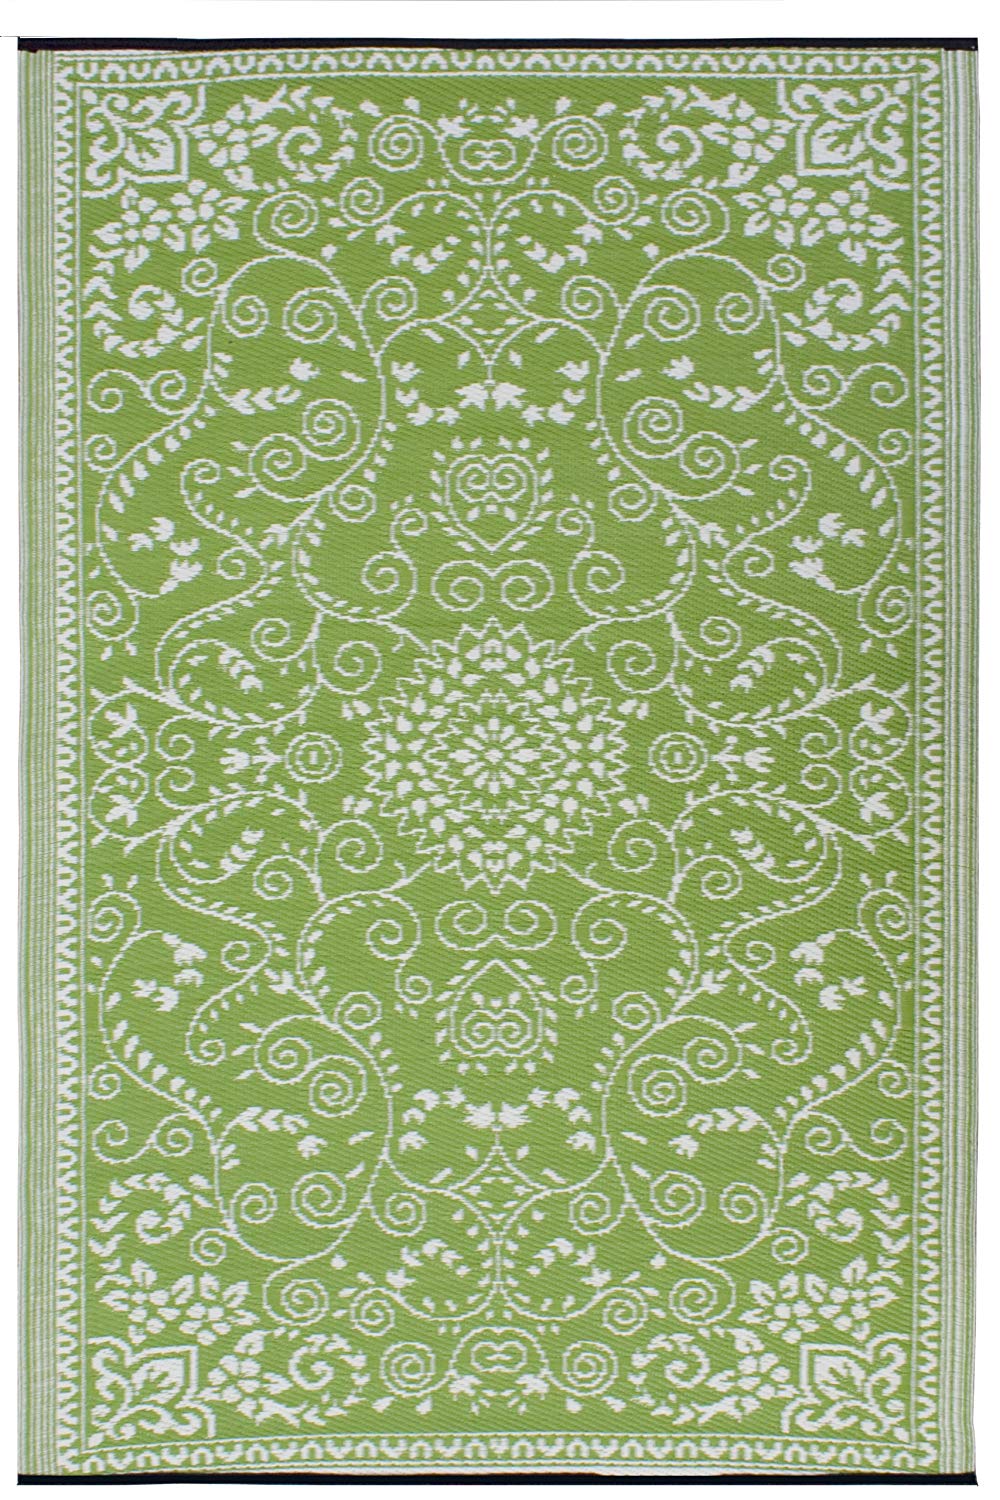 Green area rugs amazon.com : fab habitat murano recycled plastic rug, lime green u0026 cream, YIVEUGO